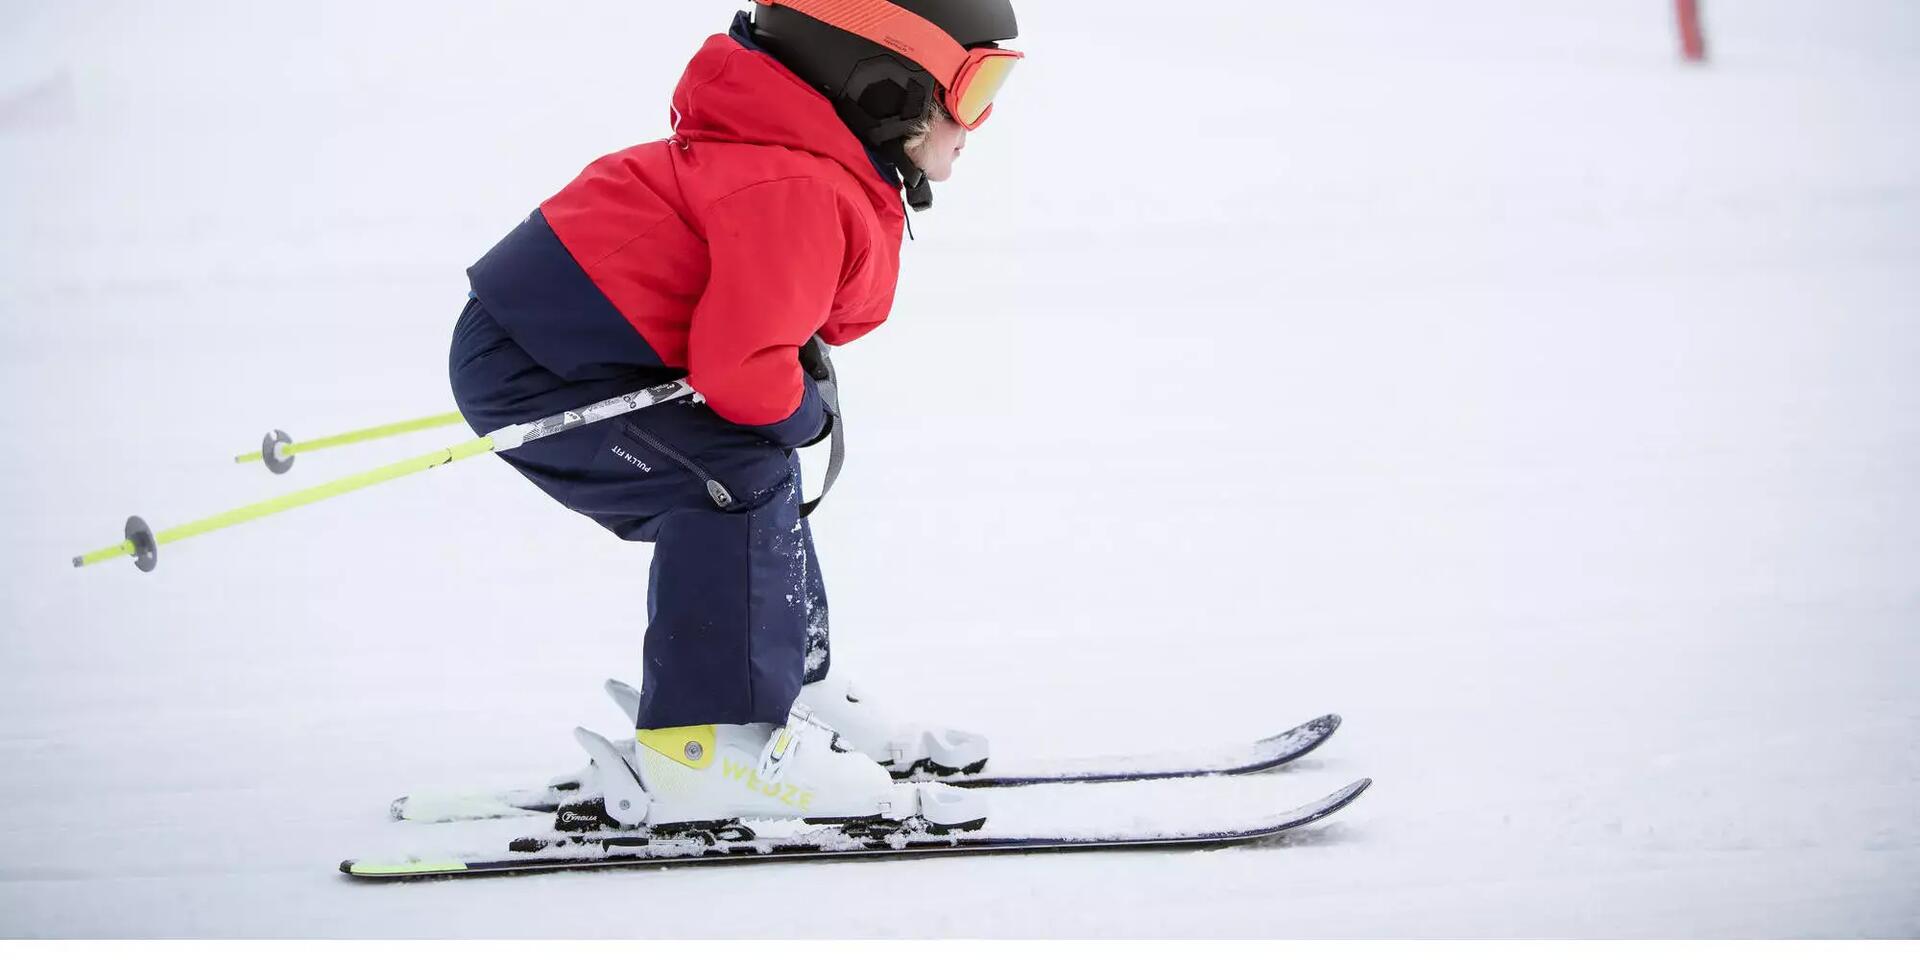 Young toddler skiing